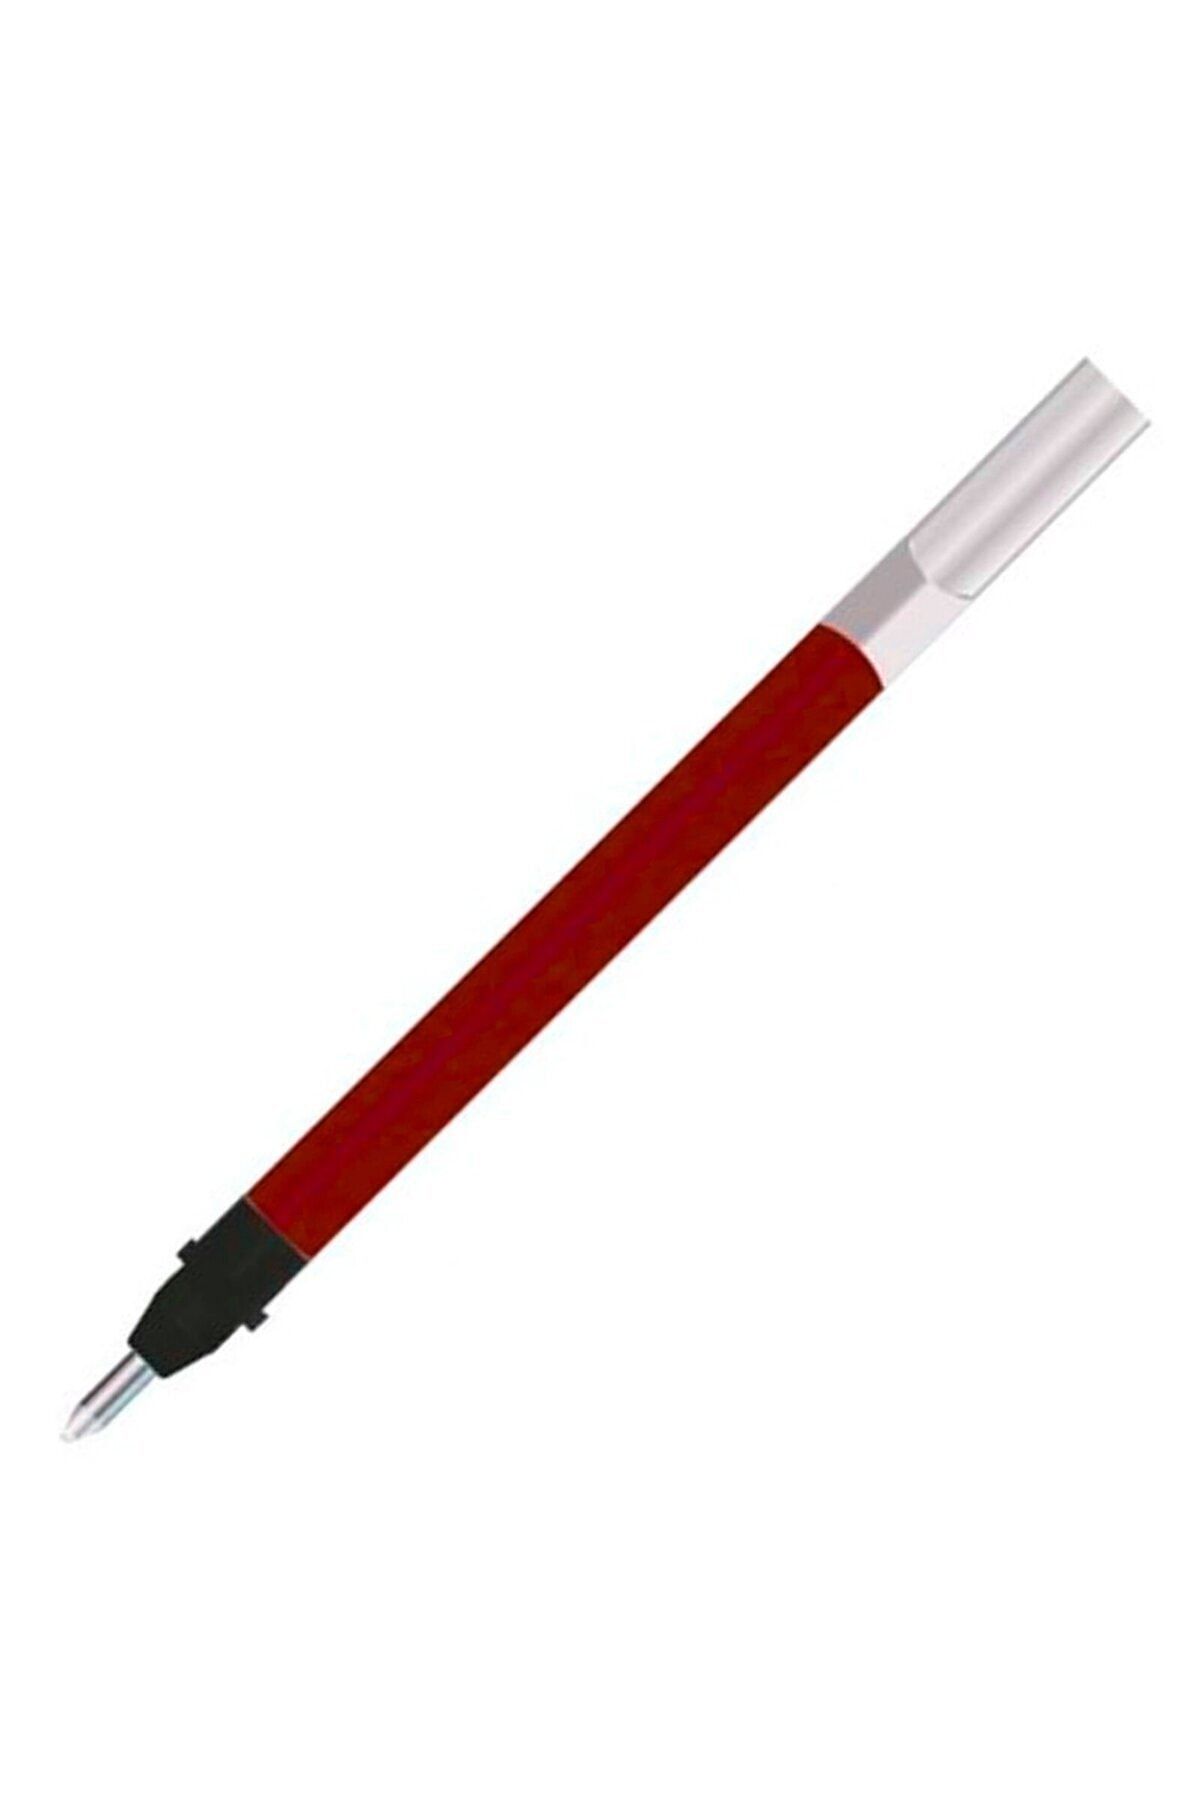 Pensan Roller Kalem Yedeği My-Sign Jel Bilye Uçlu İmza Kalem 1.0 Mm Kırmızı Refil (25 Li Paket)